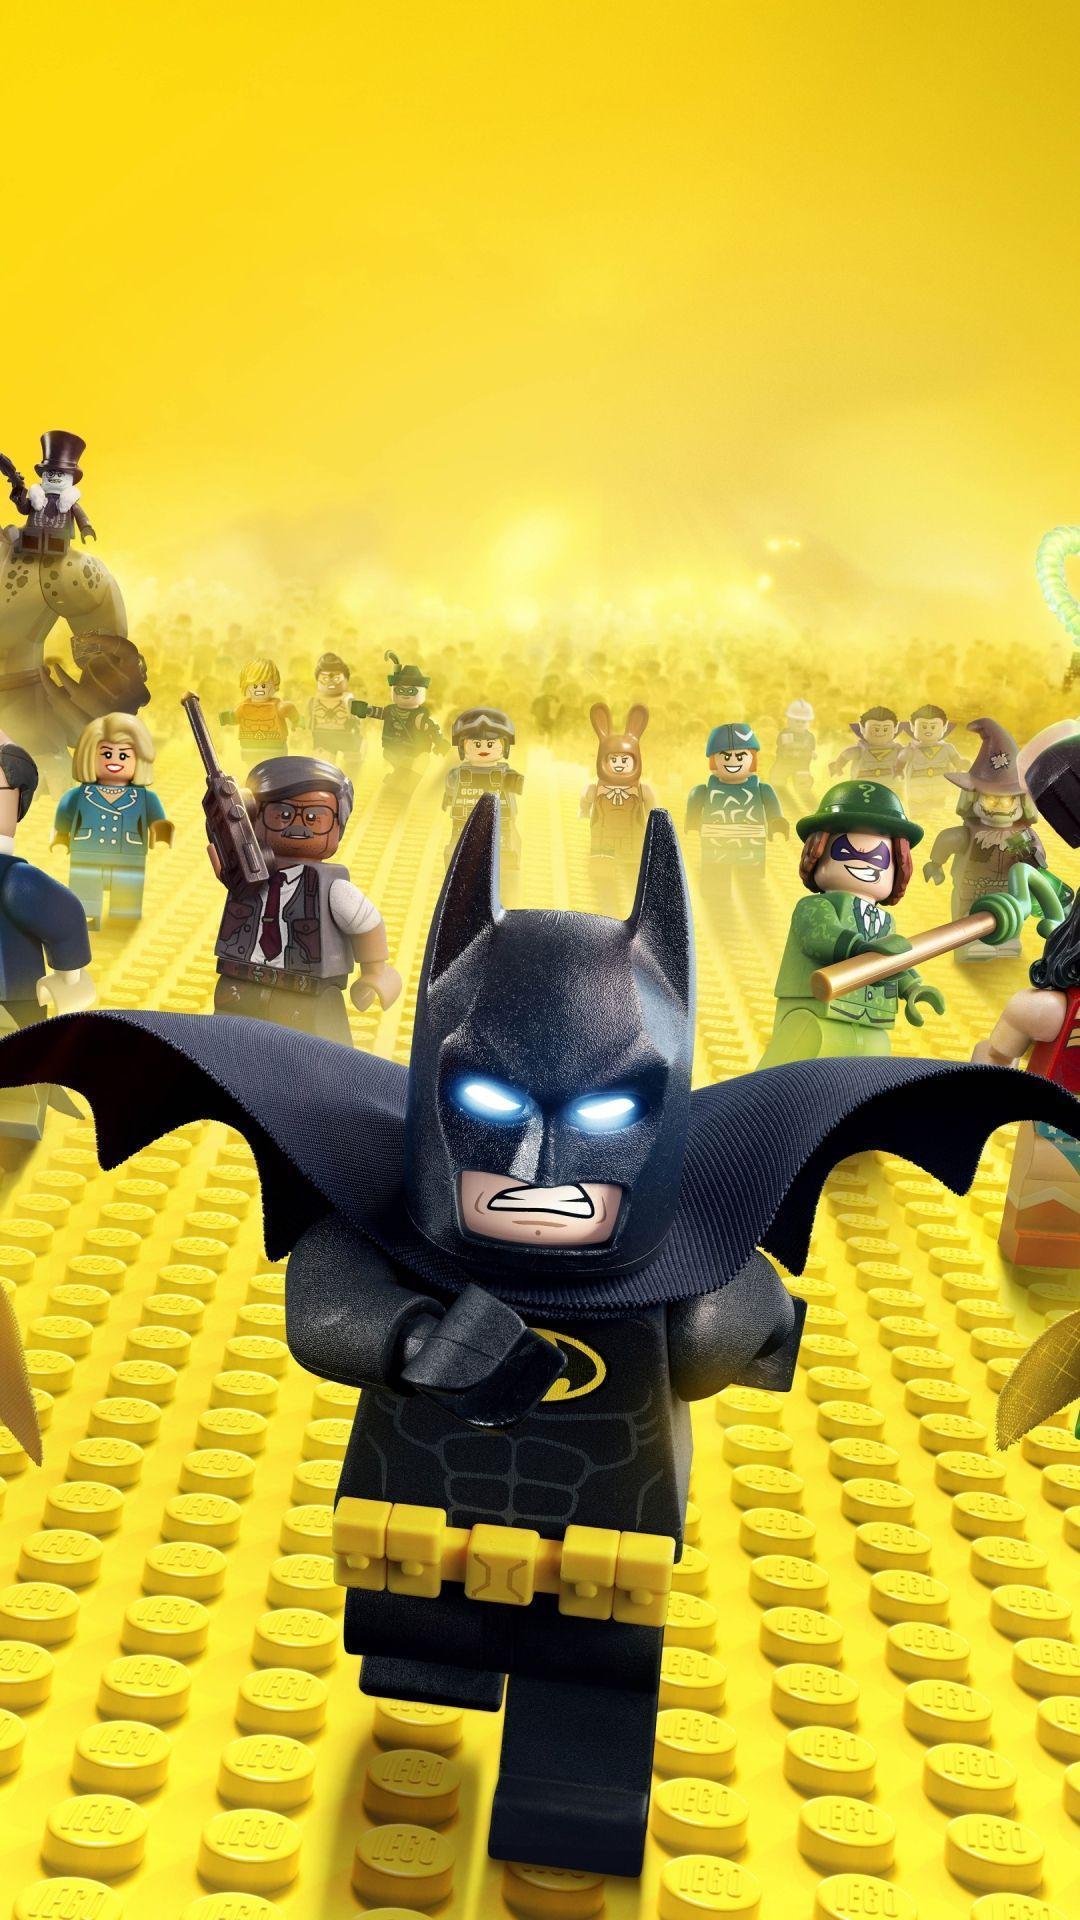 IPhone 6 Plus The Lego Batman Movie